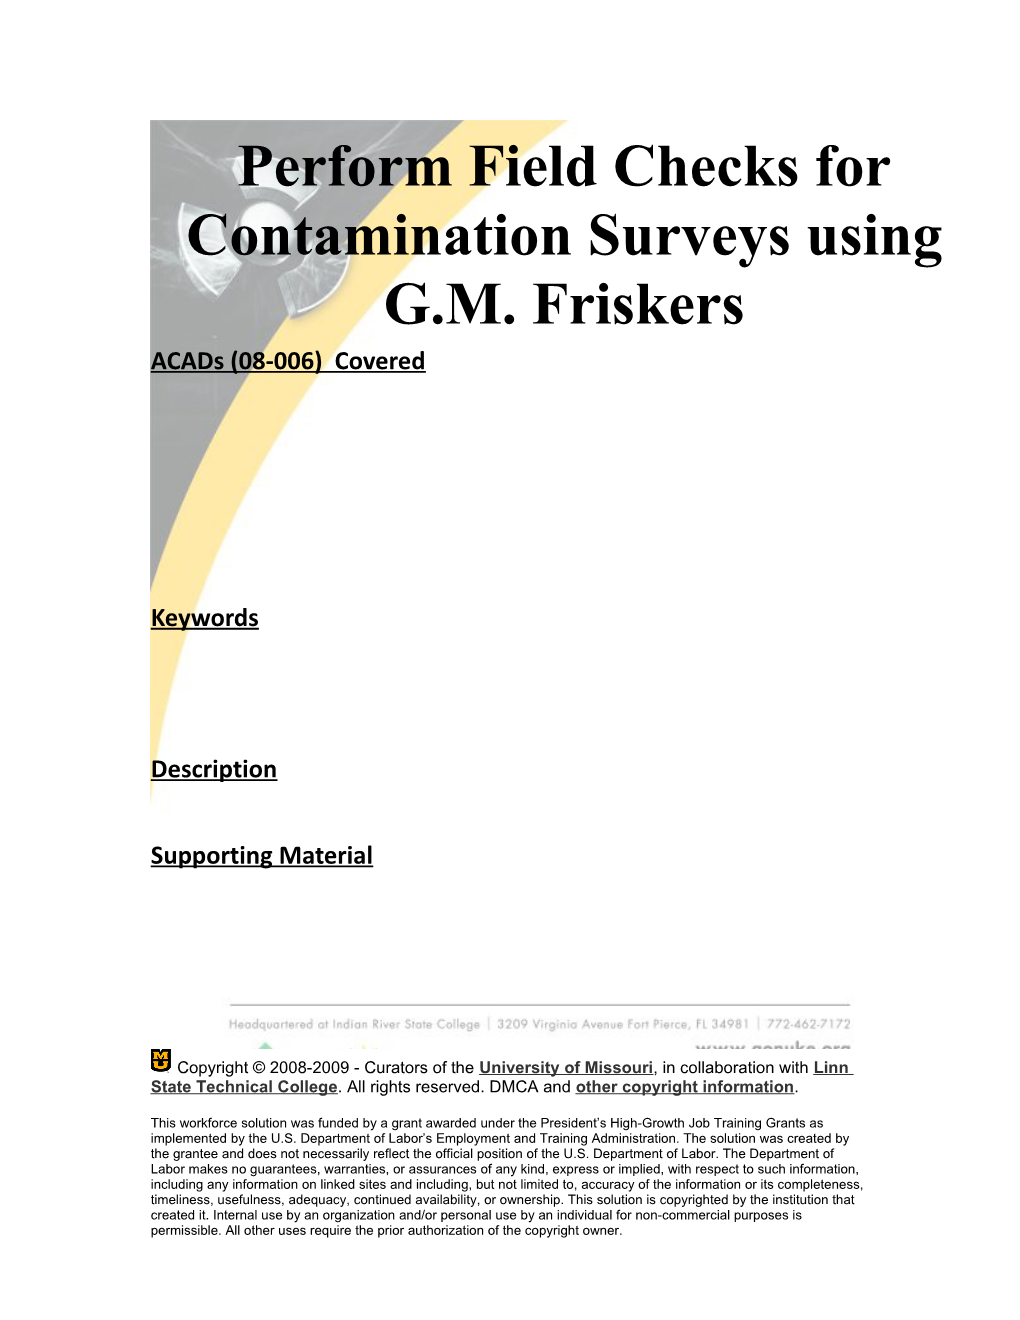 Module 4: Perform Field Checks for Contamination Surveys Using G.M. Friskers